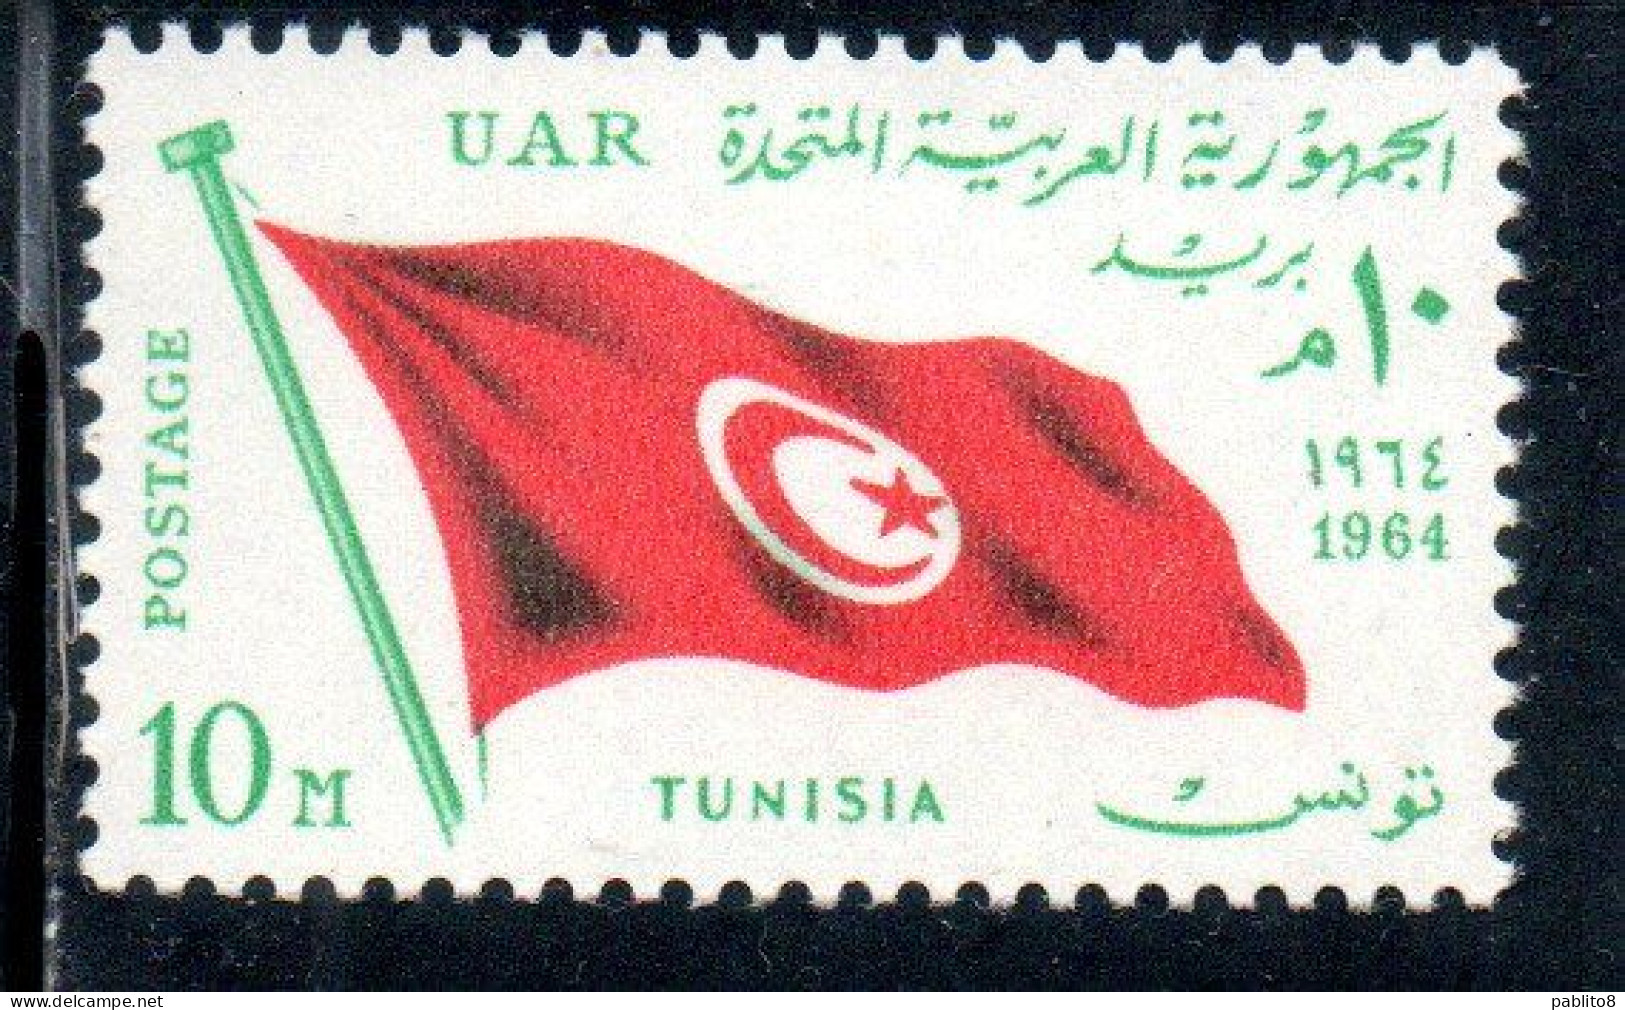 UAR EGYPT EGITTO 1964 SECOND MEETING OF HEADS STATE ARAB LEAGUE FLAG OF TUNISIA 10m MNH - Nuovi